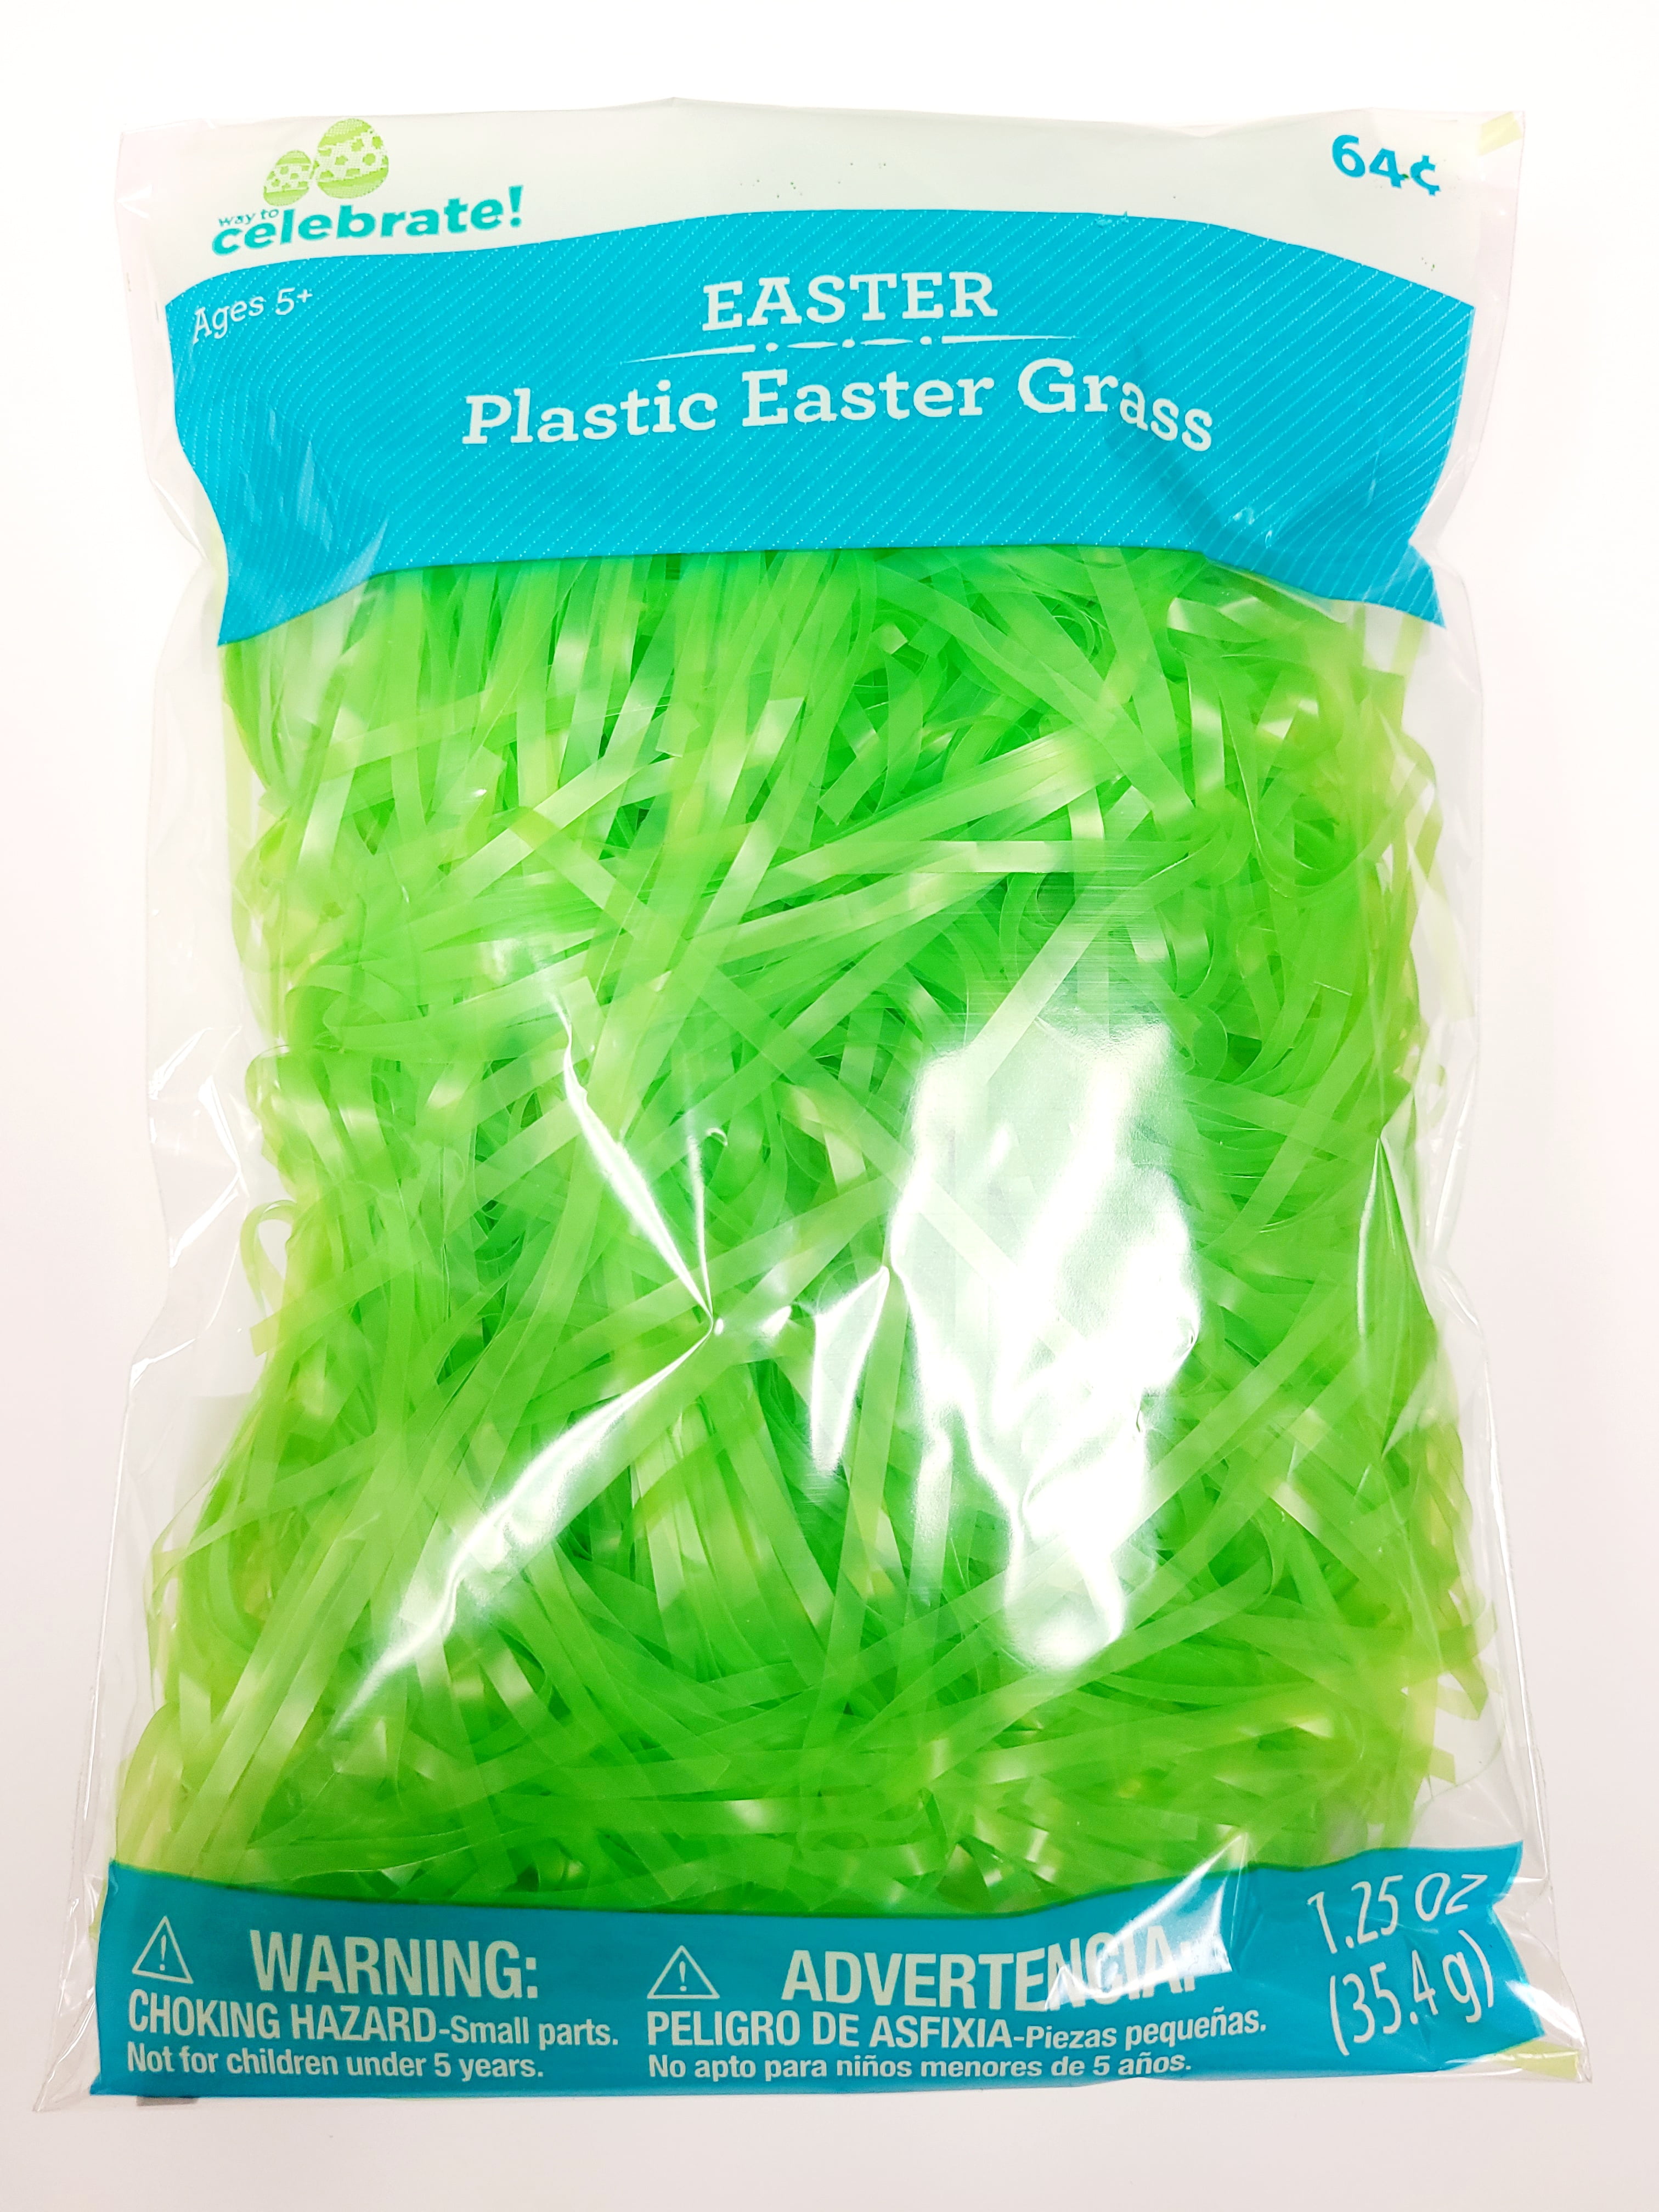 10 oz Bag of Green Easter Grass